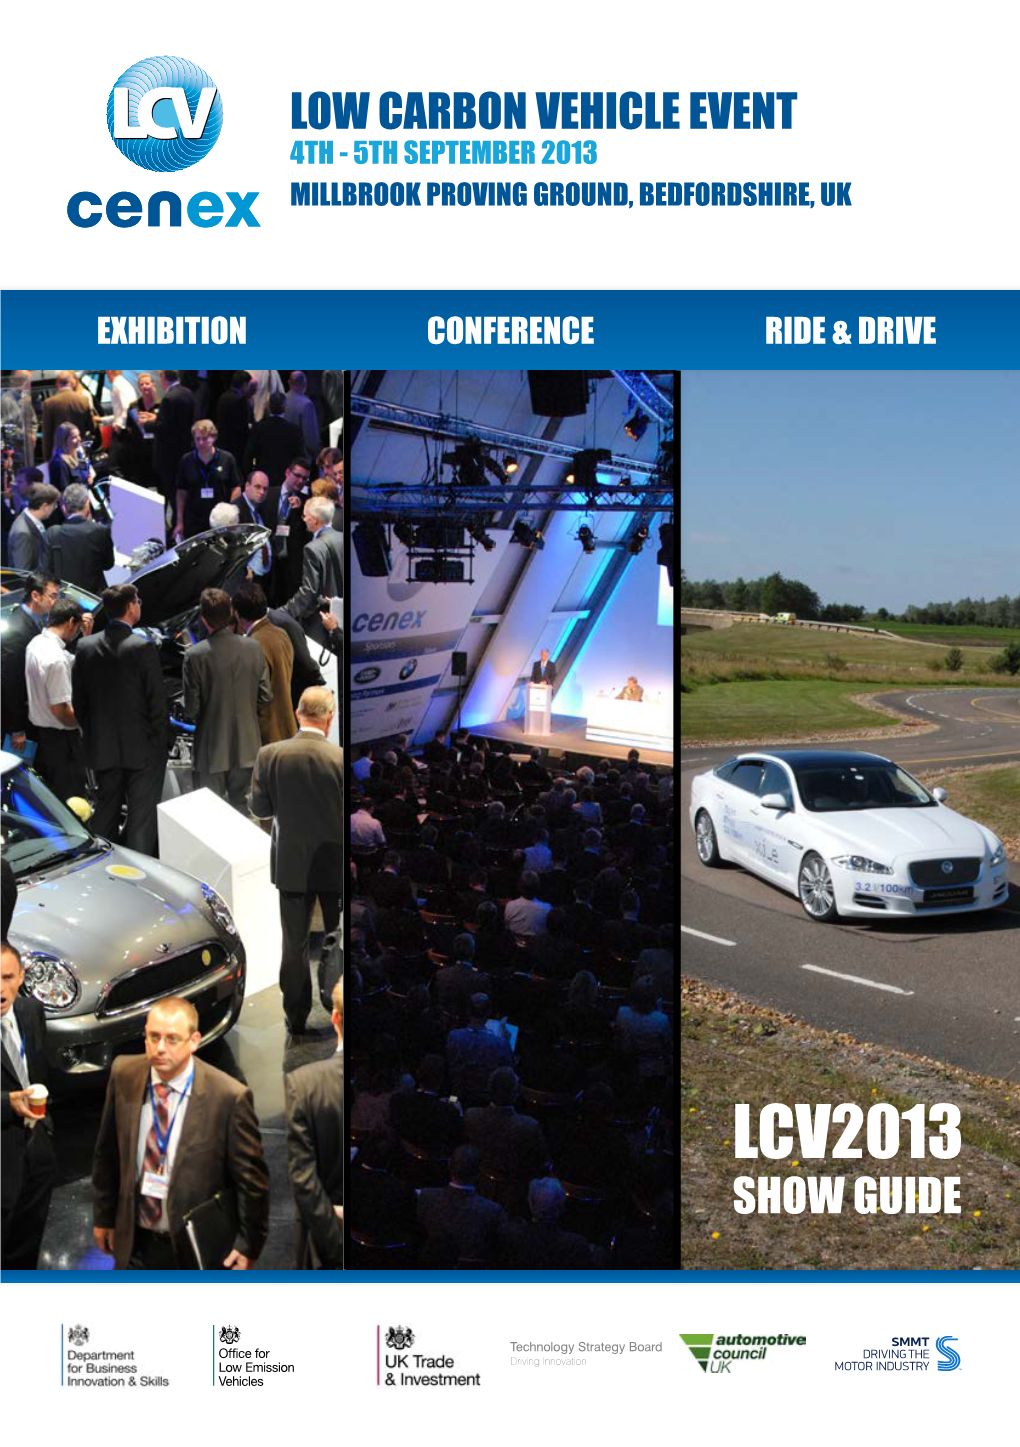 LCV2013 SHOW GUIDE Contents